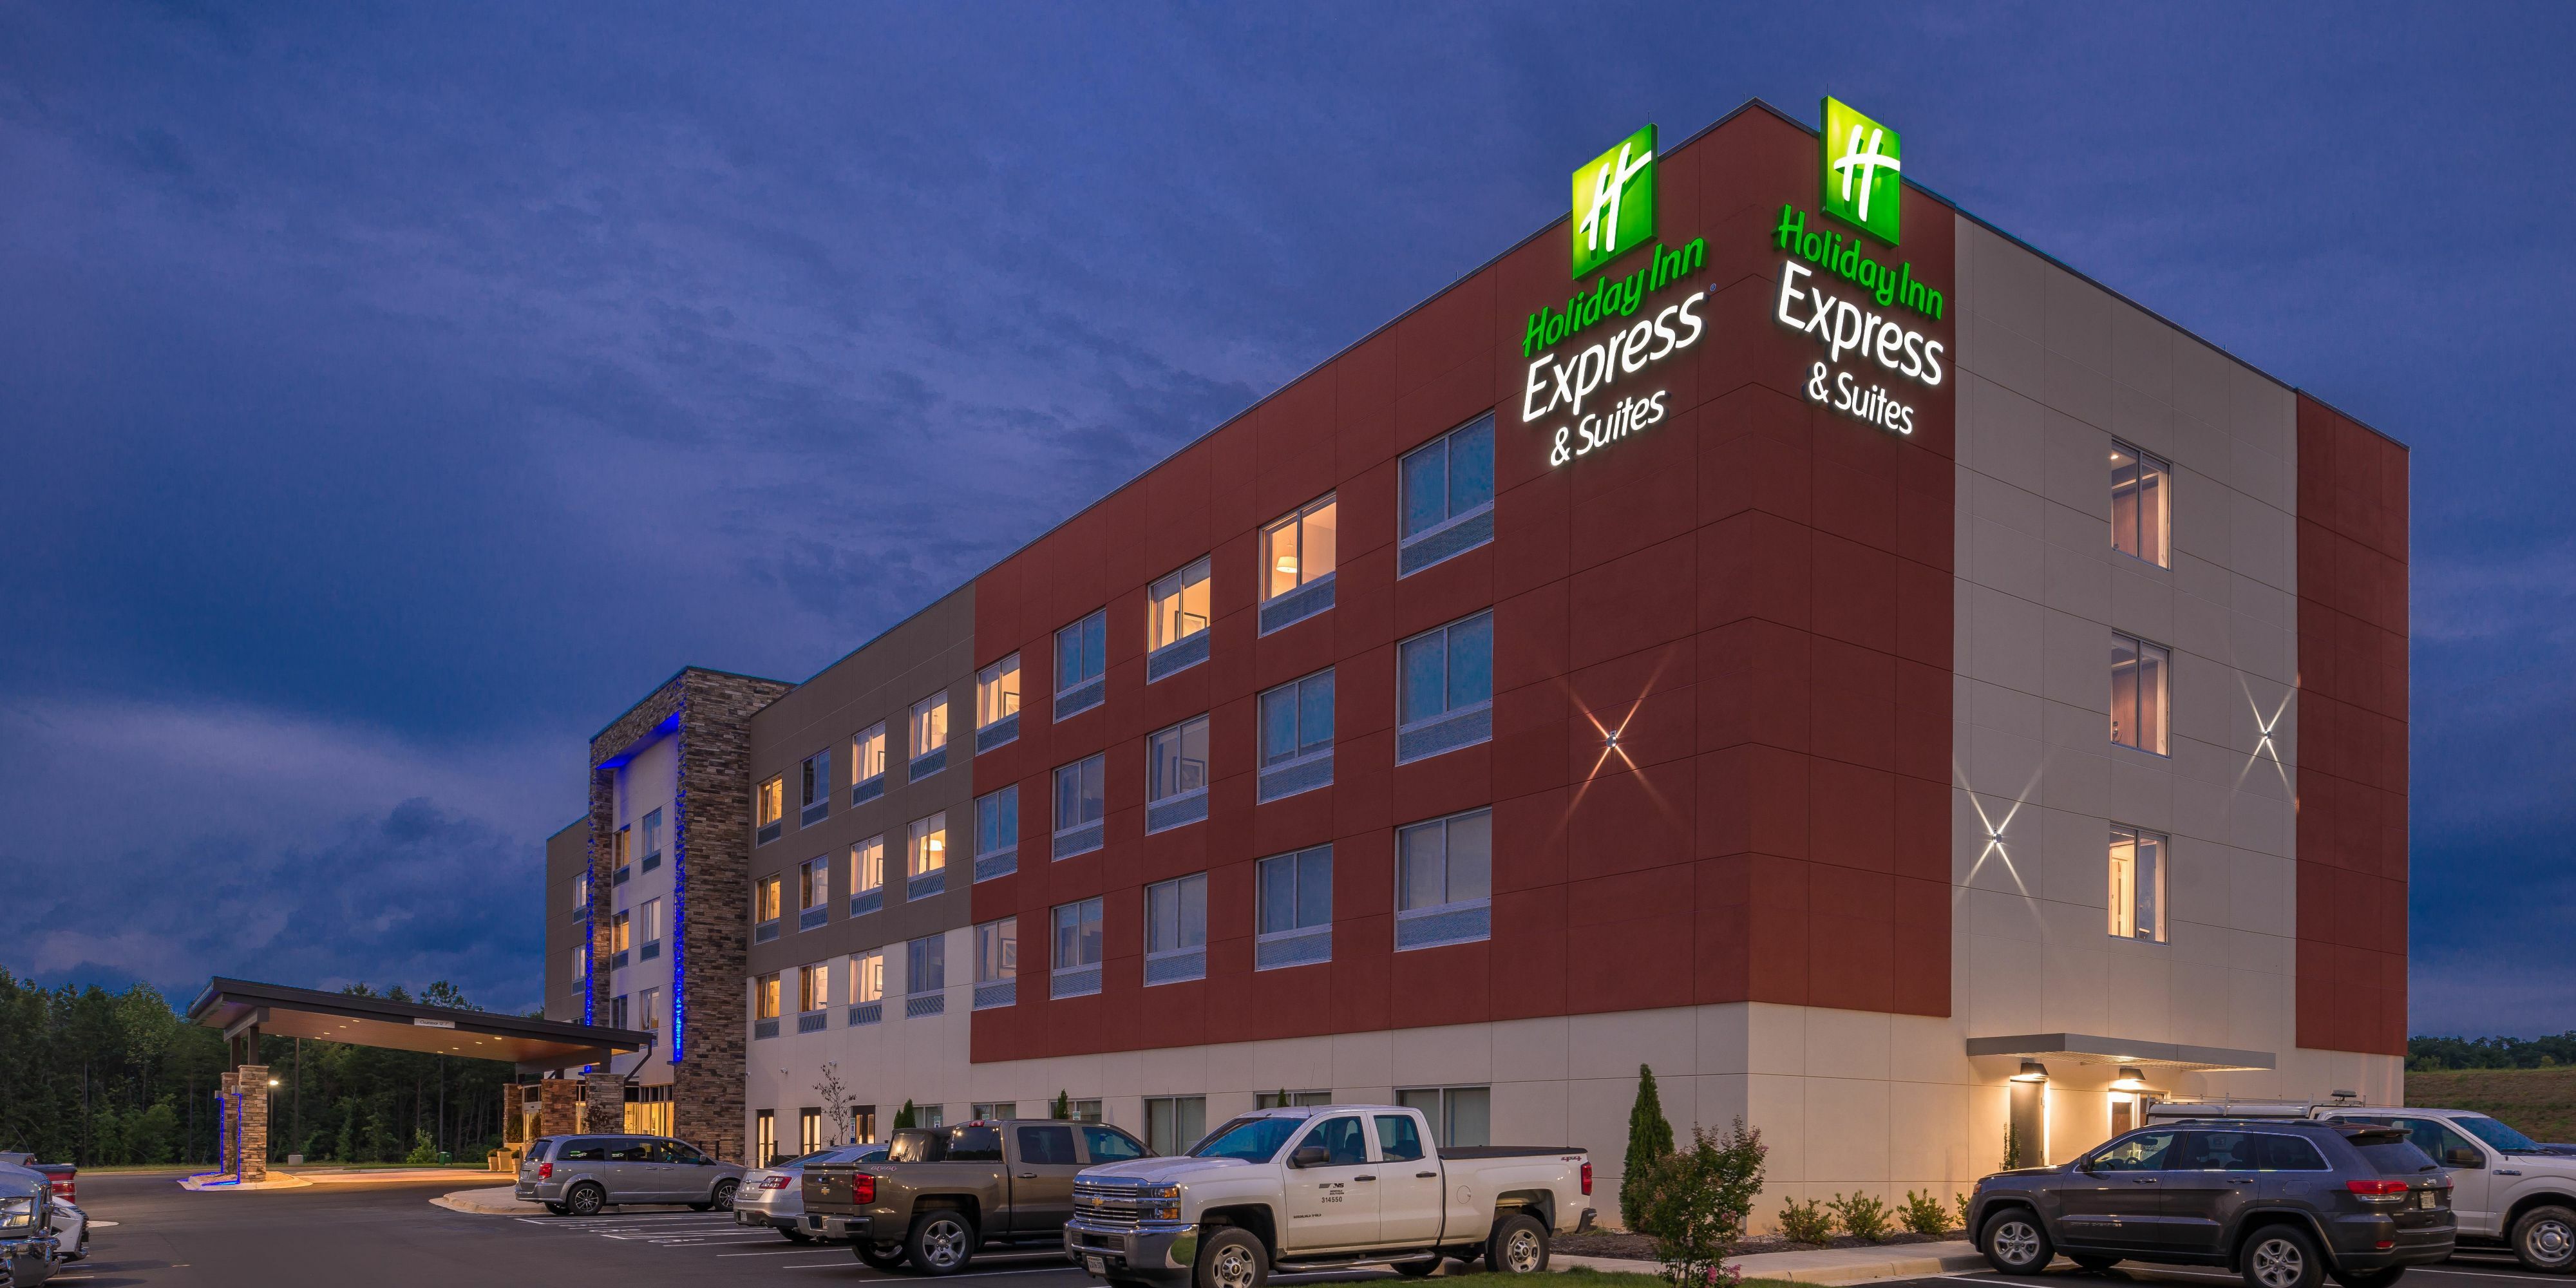 Photo of Holiday Inn Express & Suites Farmville, Farmville, VA